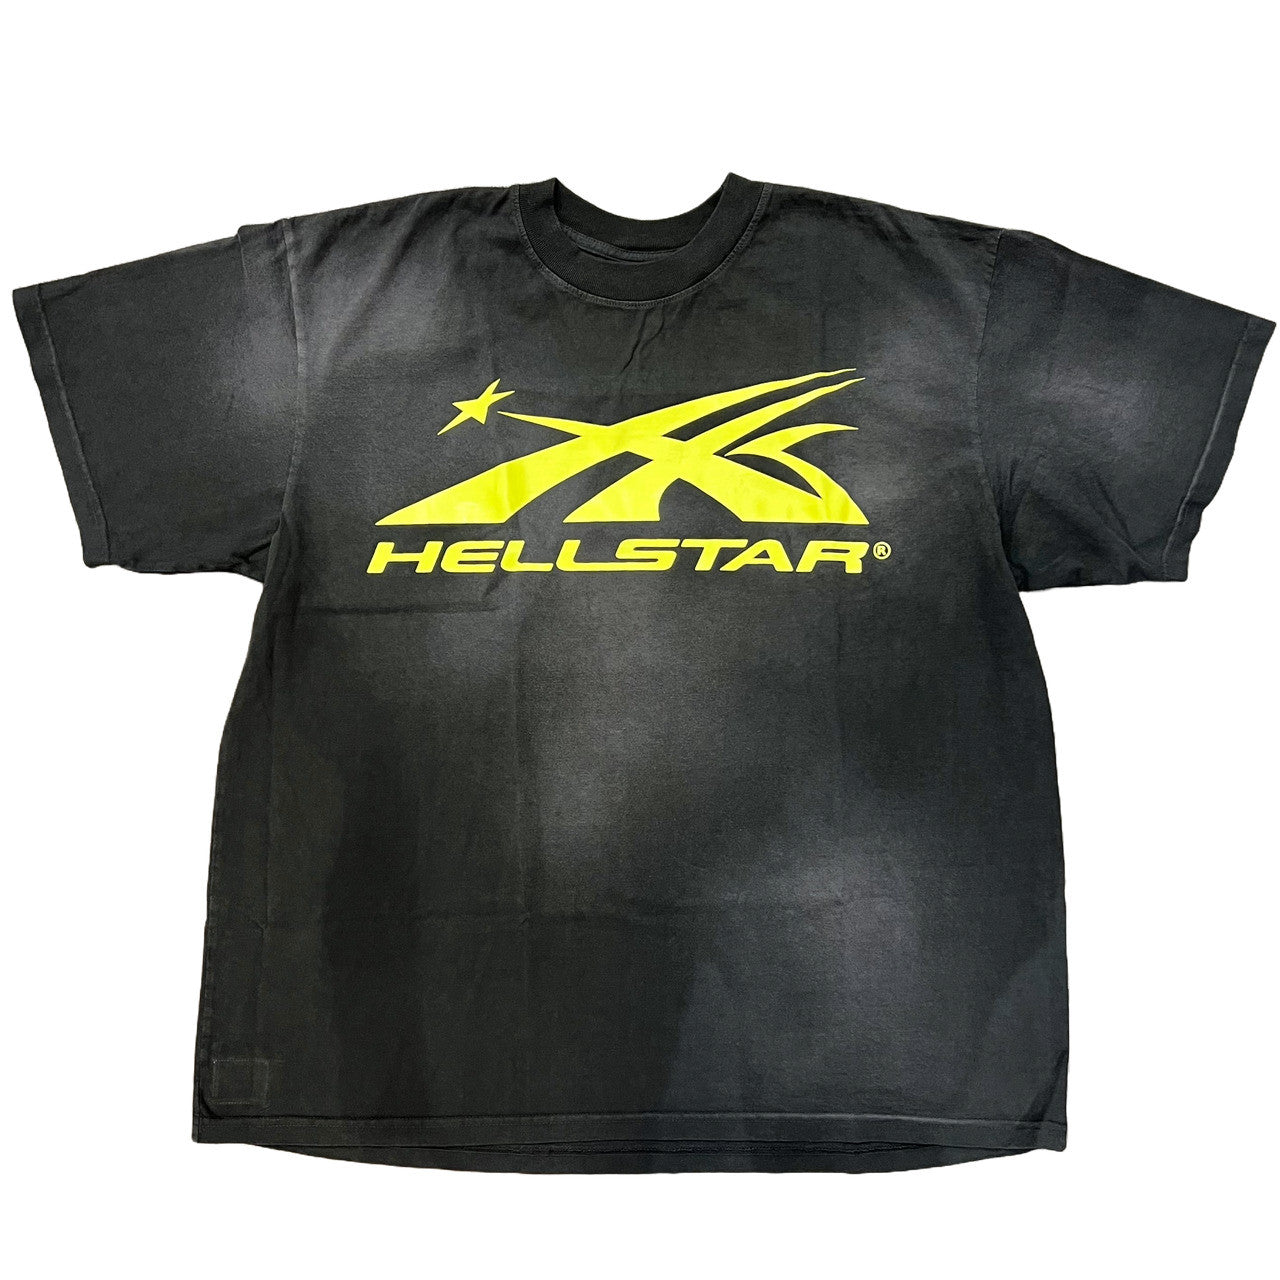 Hellstar Gel Sport Logo T-Shirt Black/Yellow